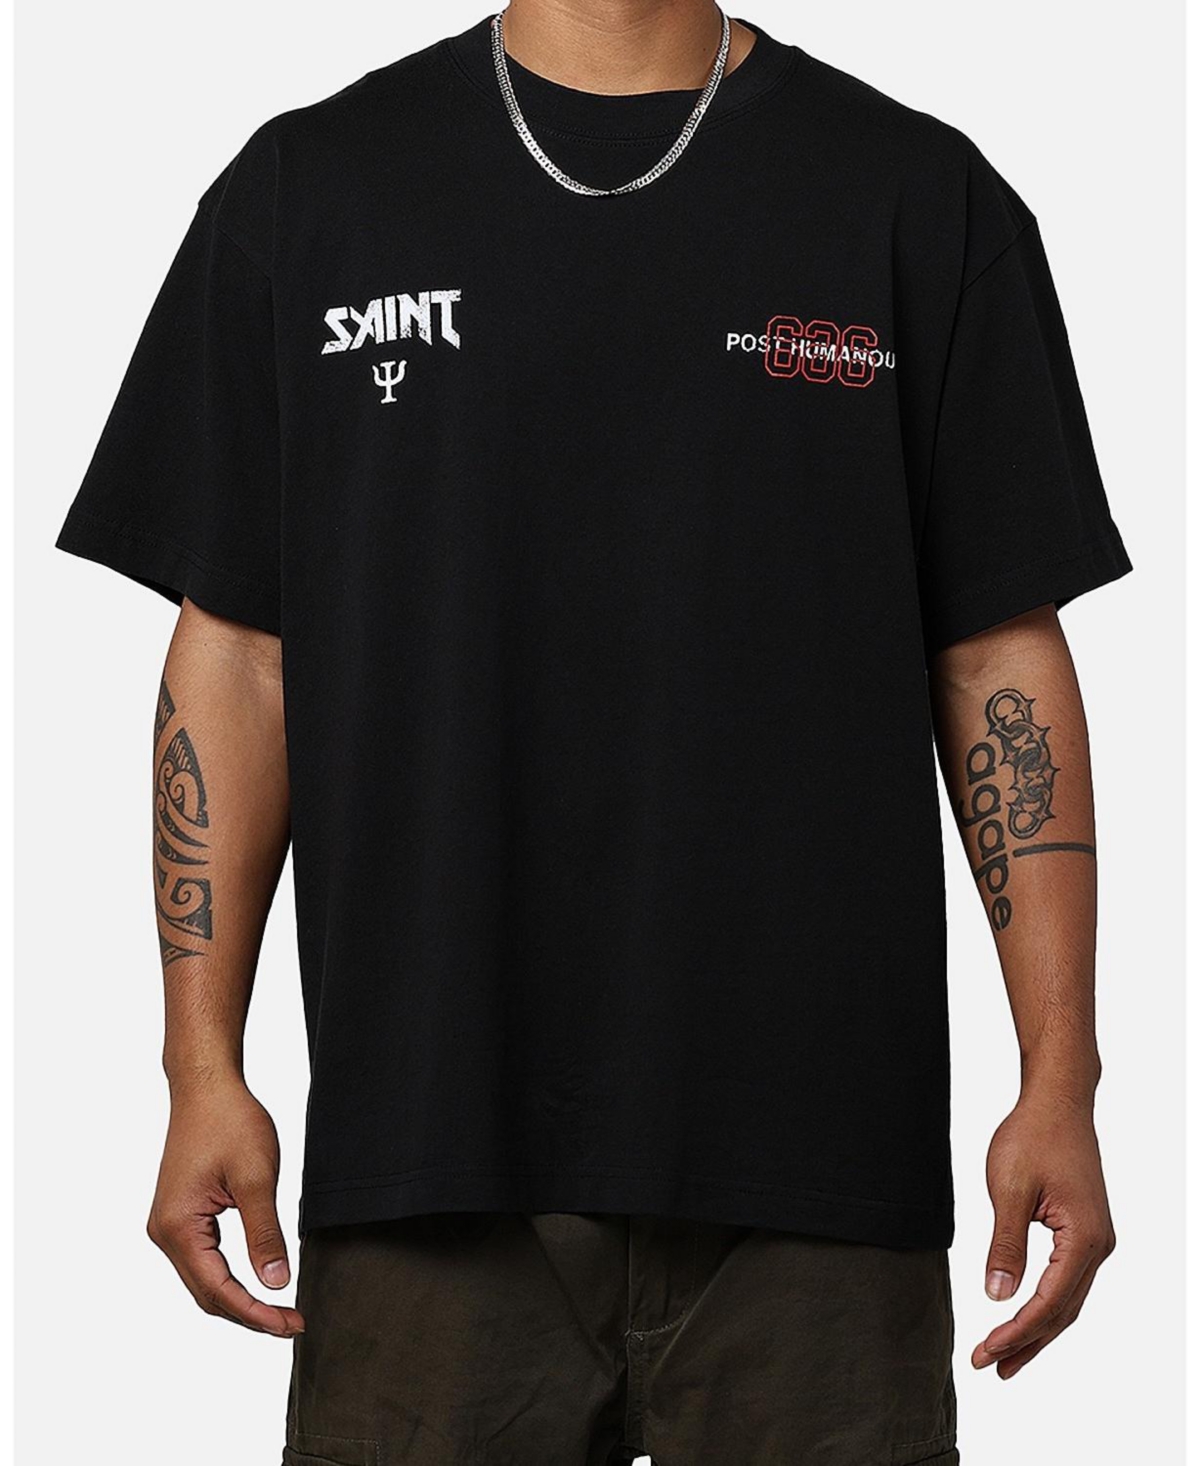 Men's Death Wish Patrol T-Shirt - Black